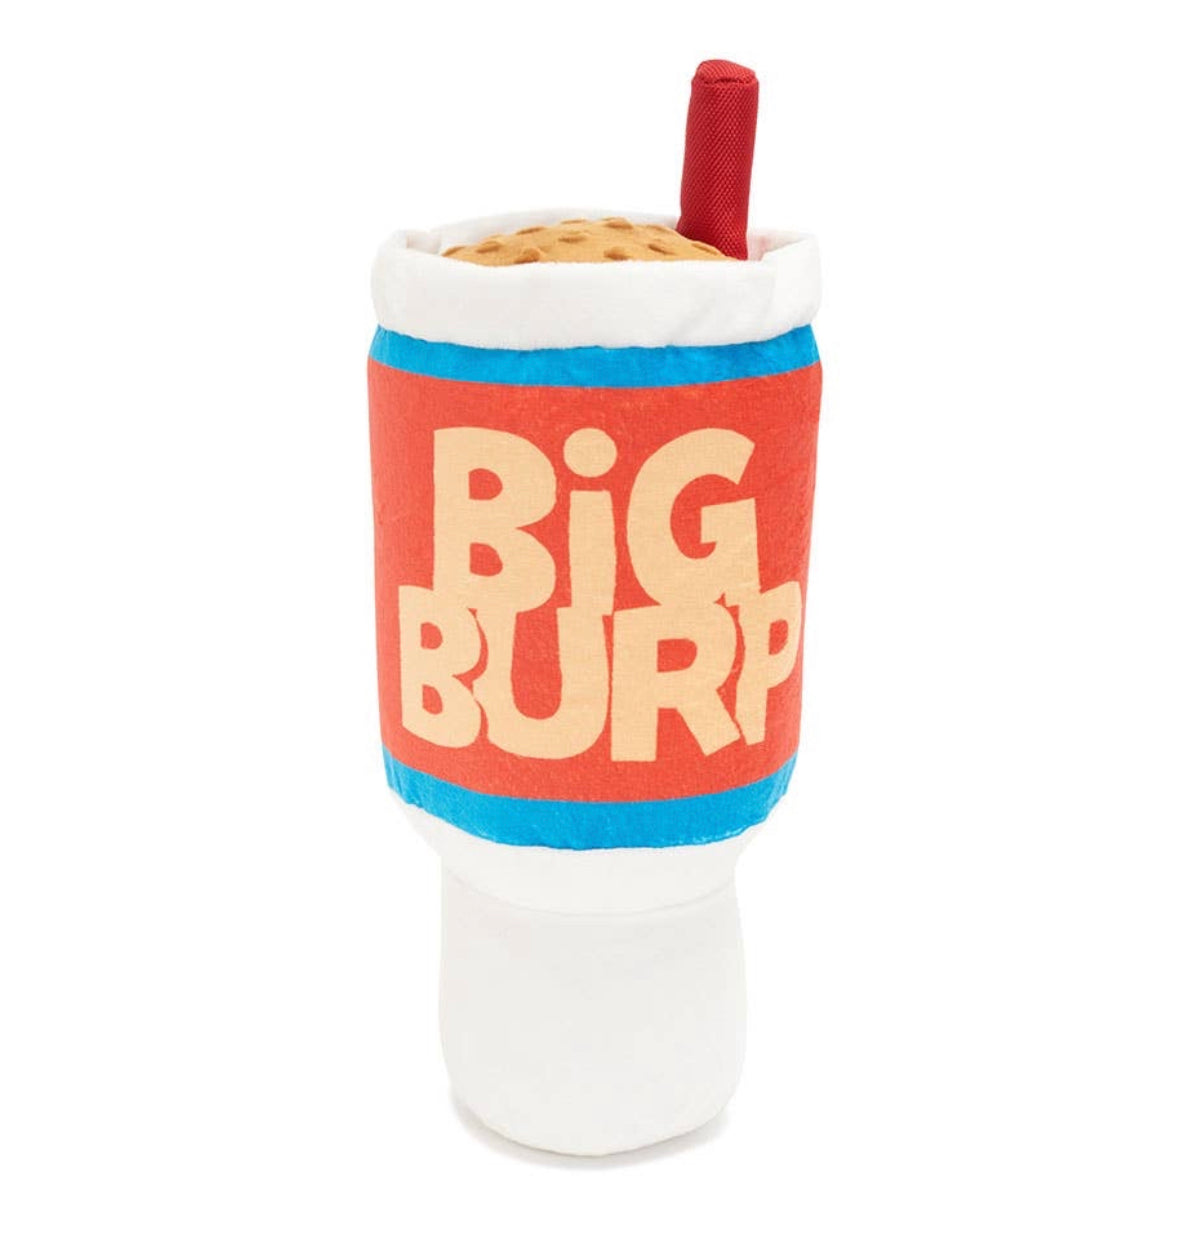 Big Burp Slurp